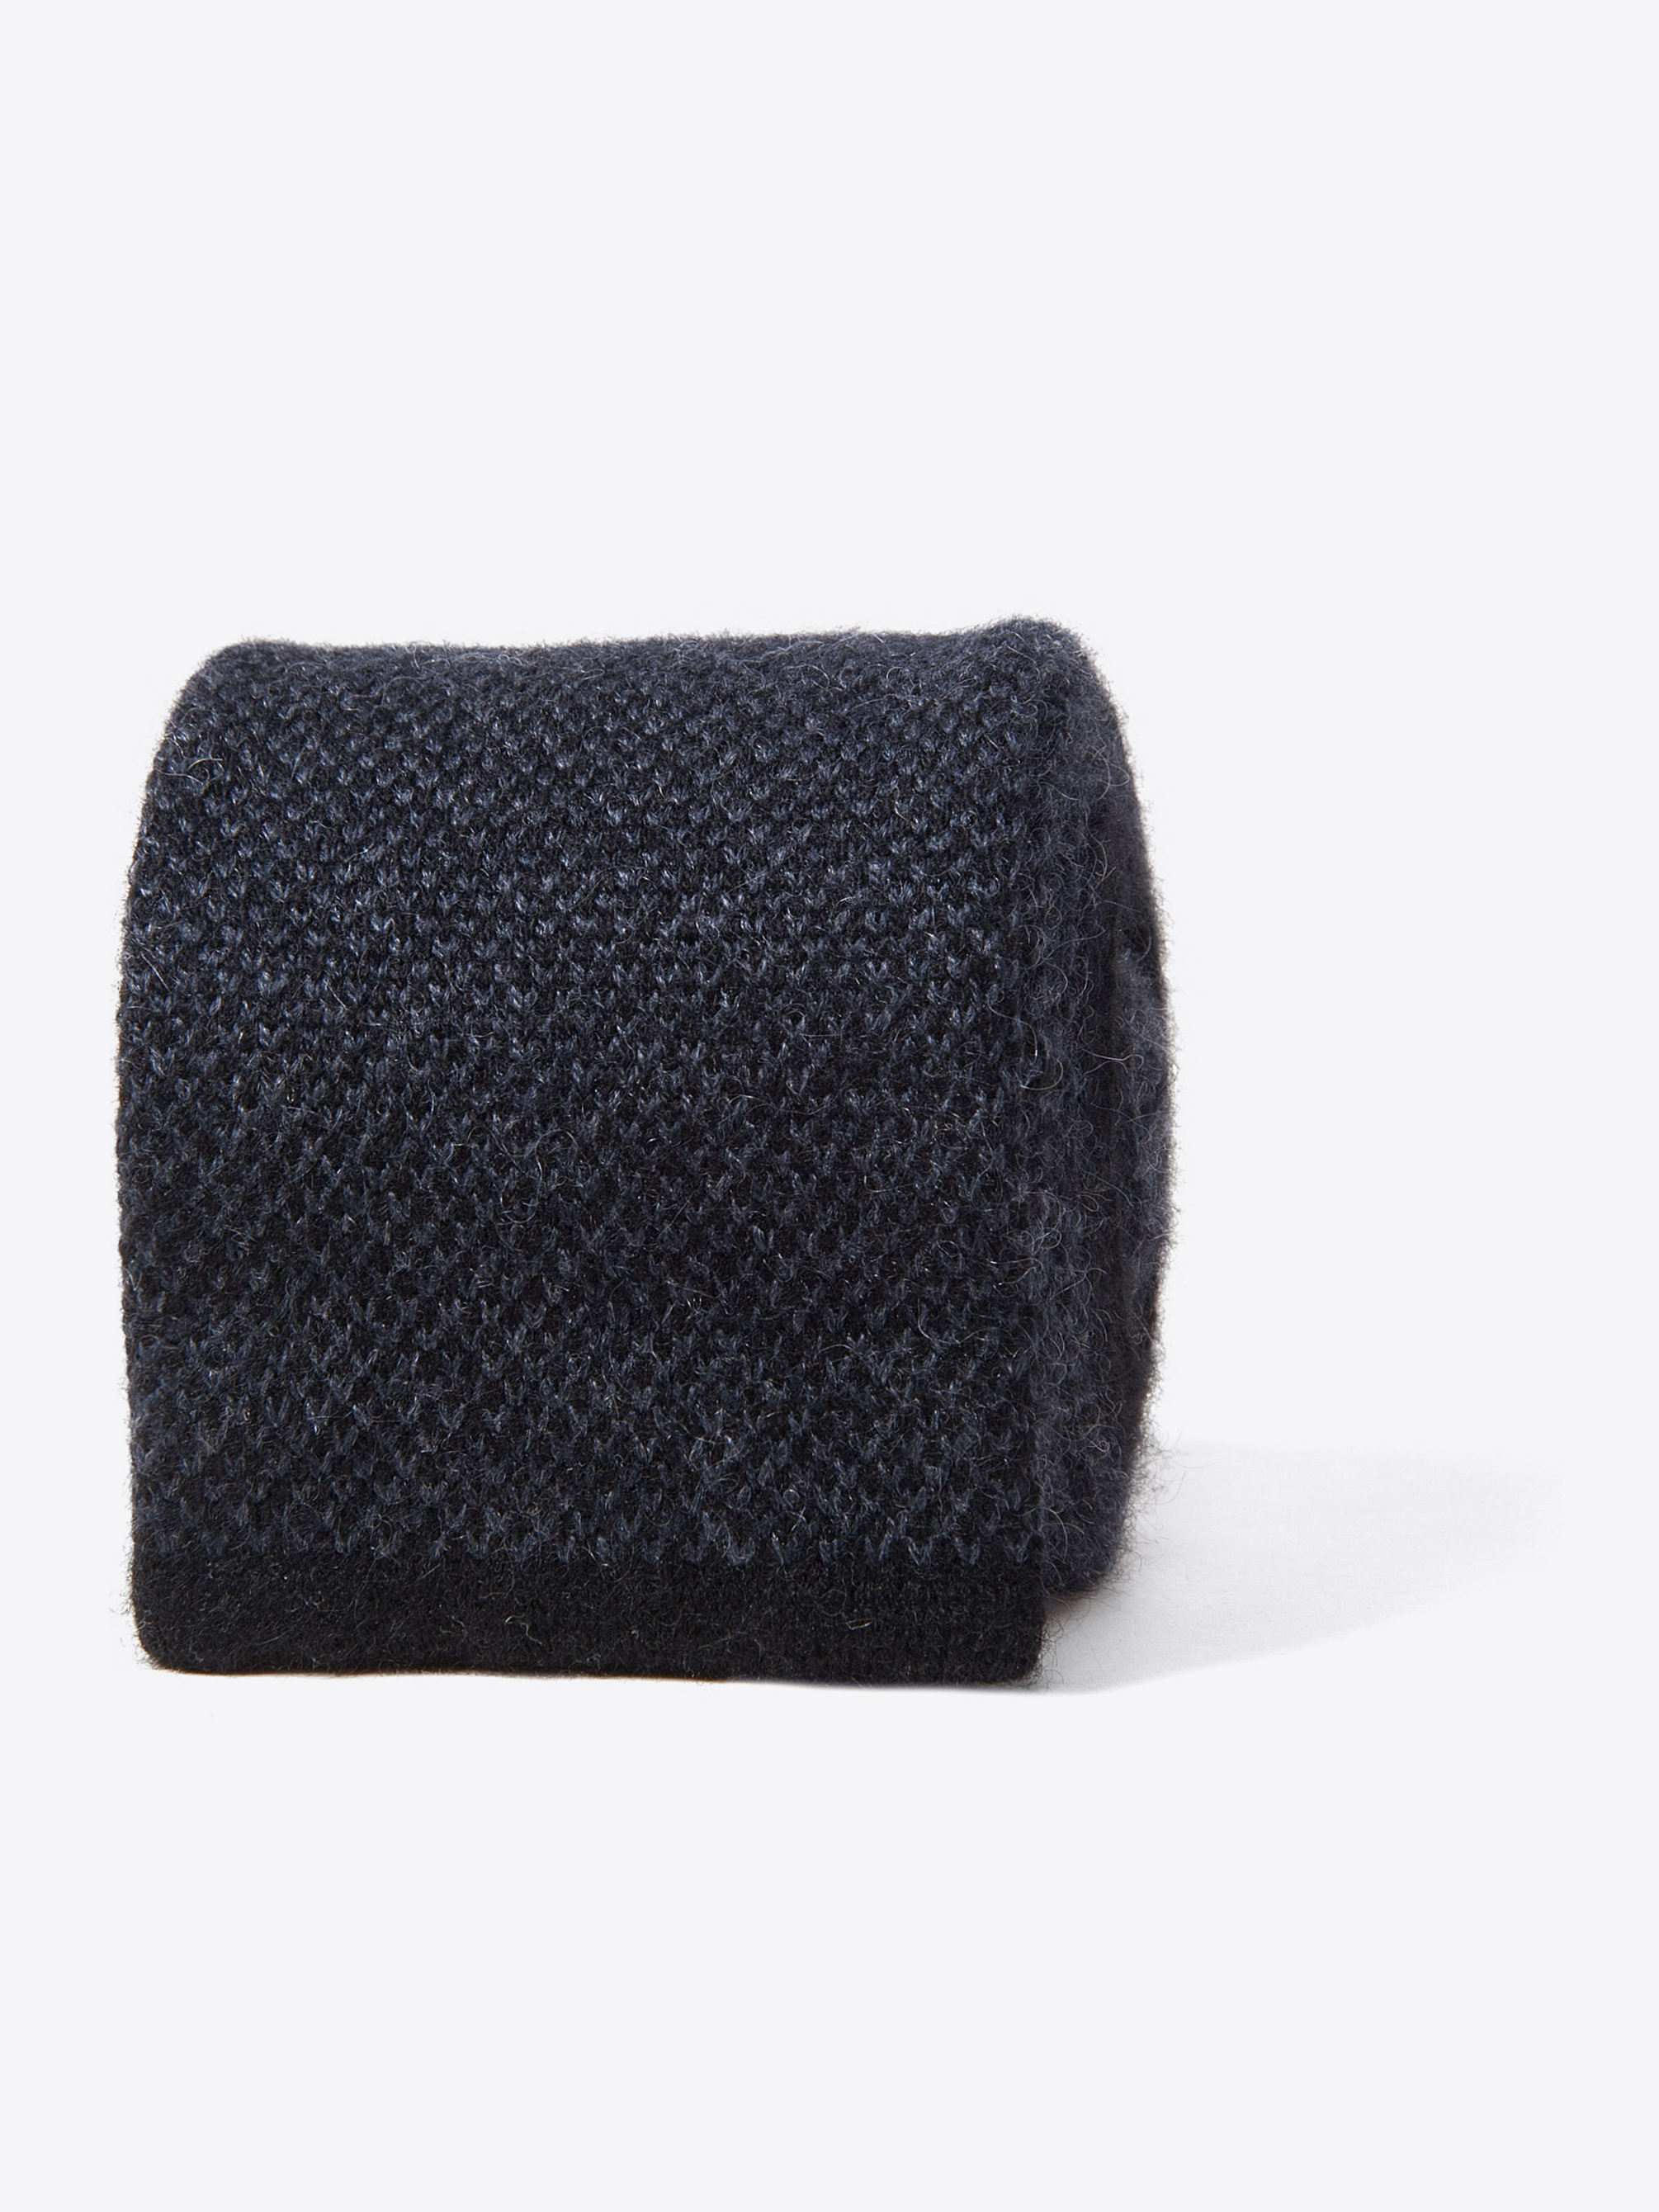 Zoom Image of Charcoal Birdseye Cashmere Knit Tie